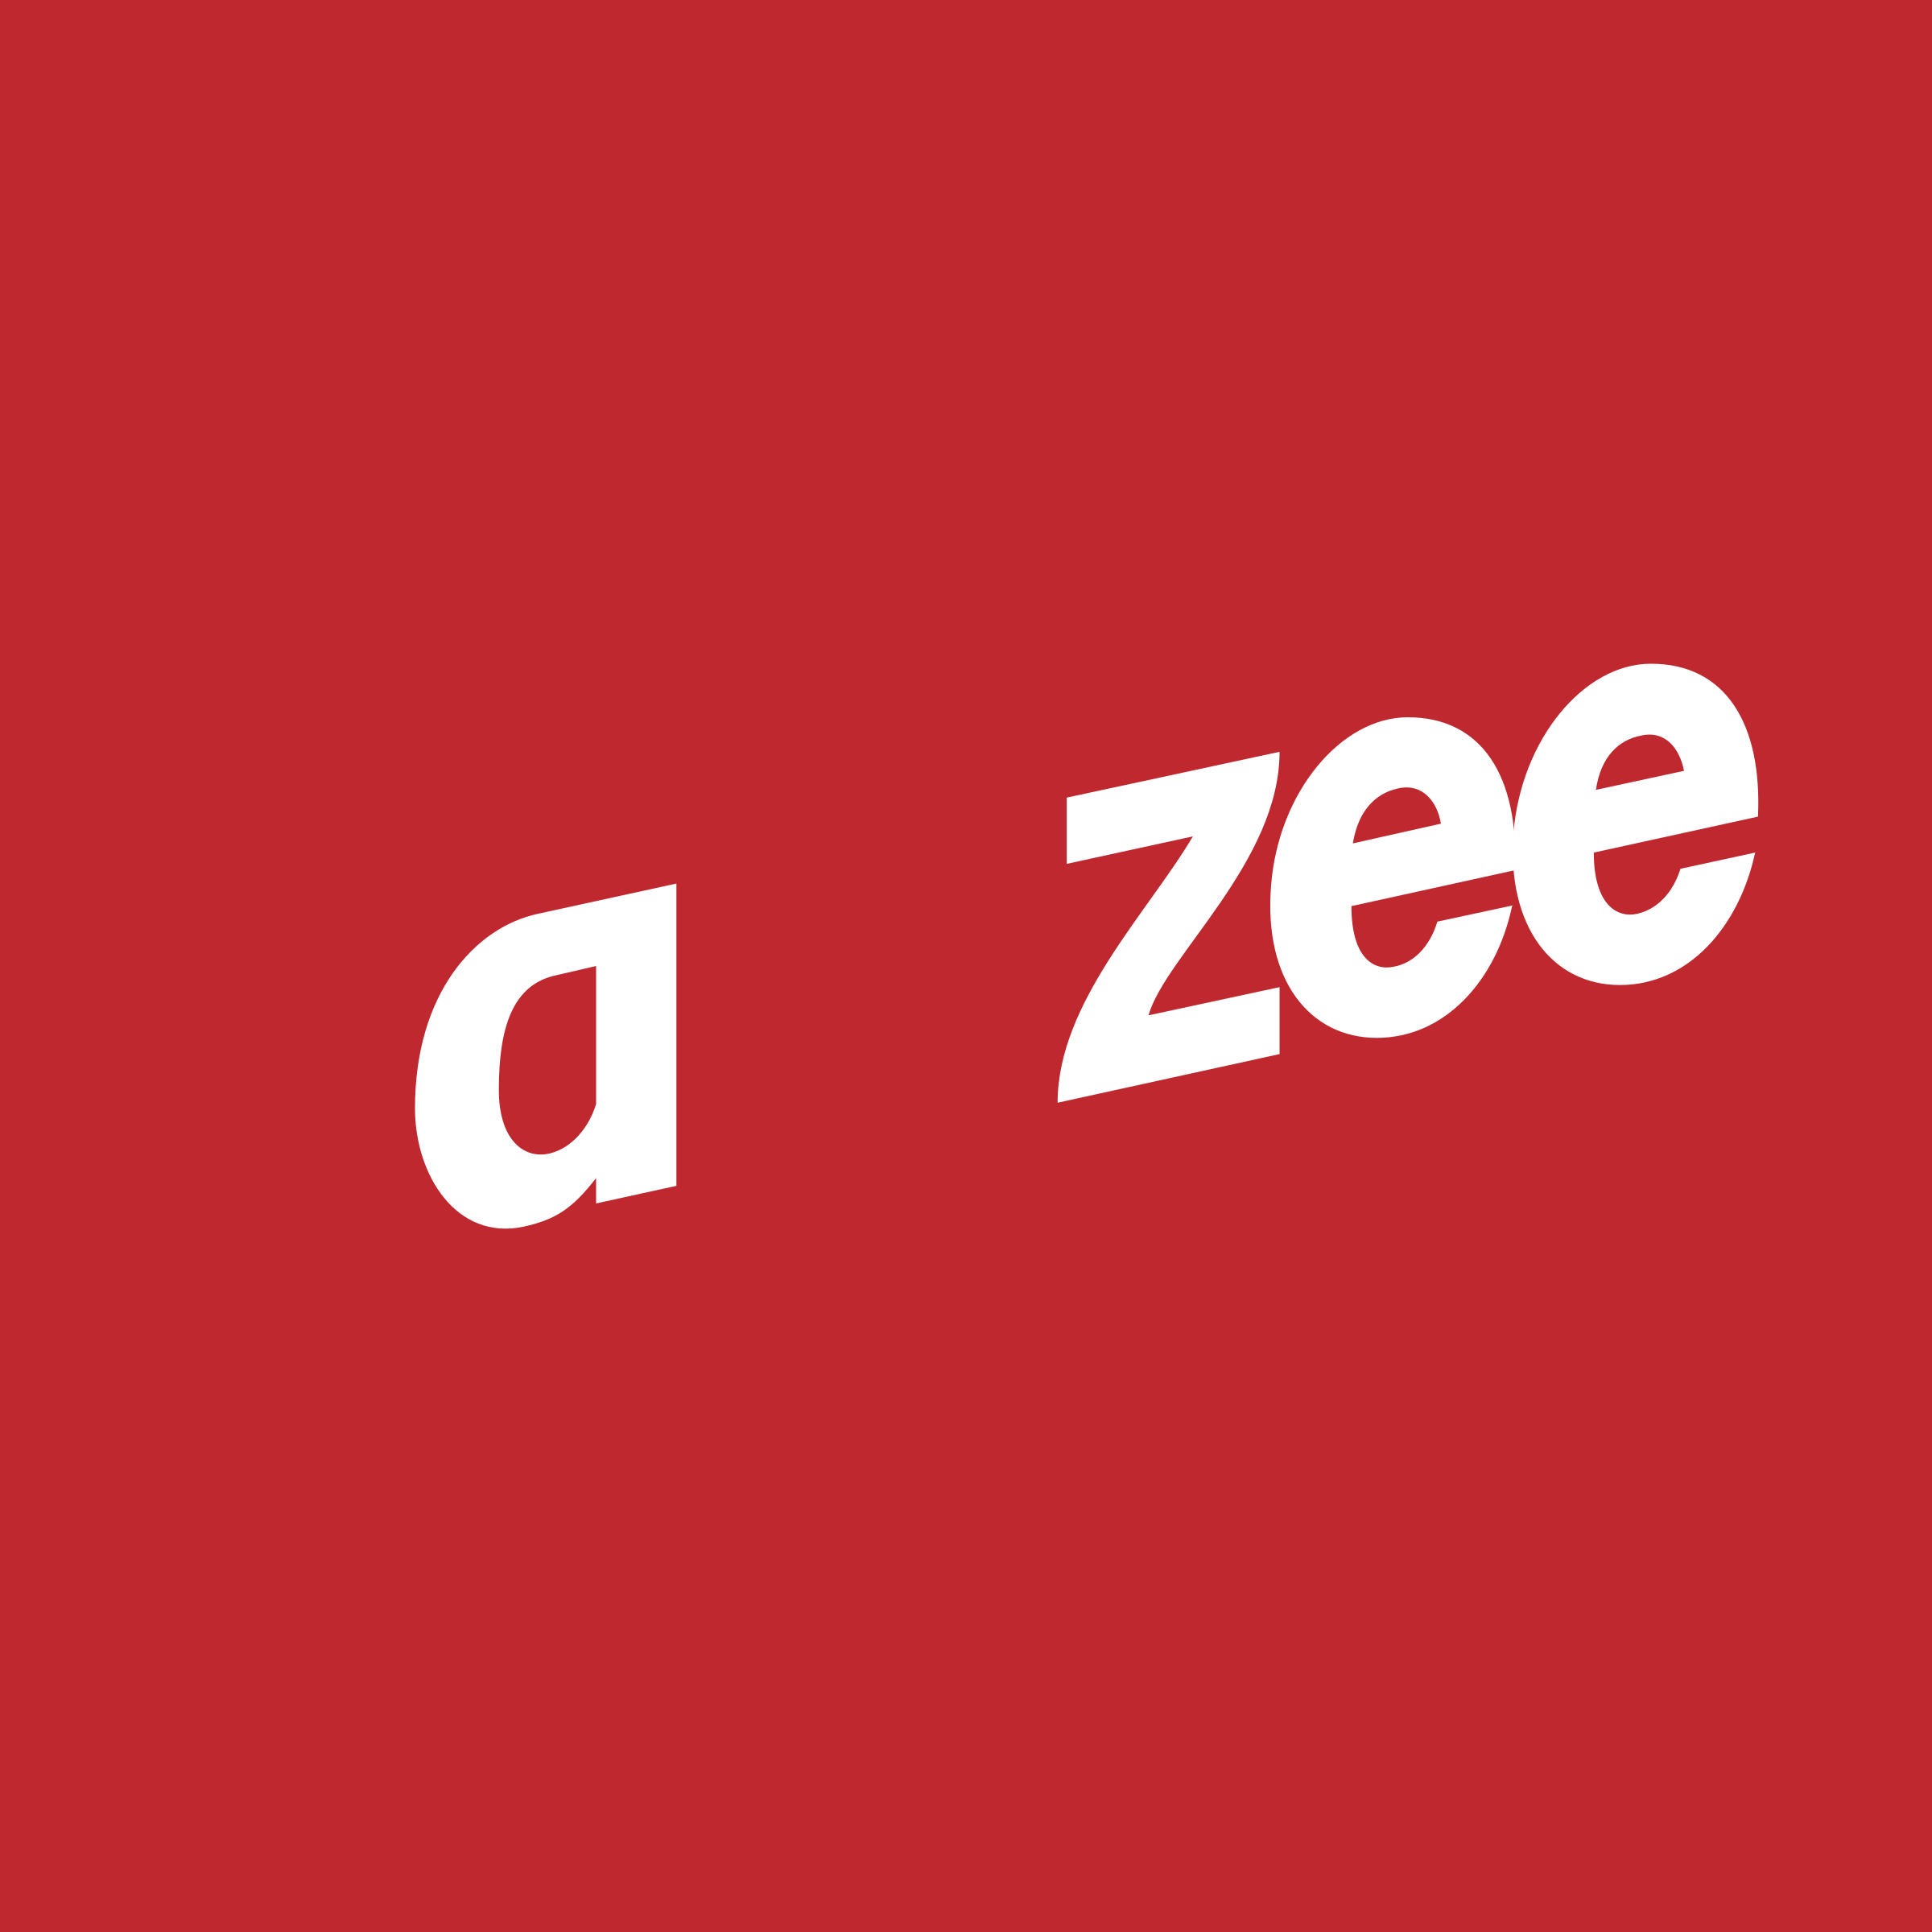 Yahtzee Logo - Yahtzee Logo PNG Transparent & SVG Vector - Freebie Supply